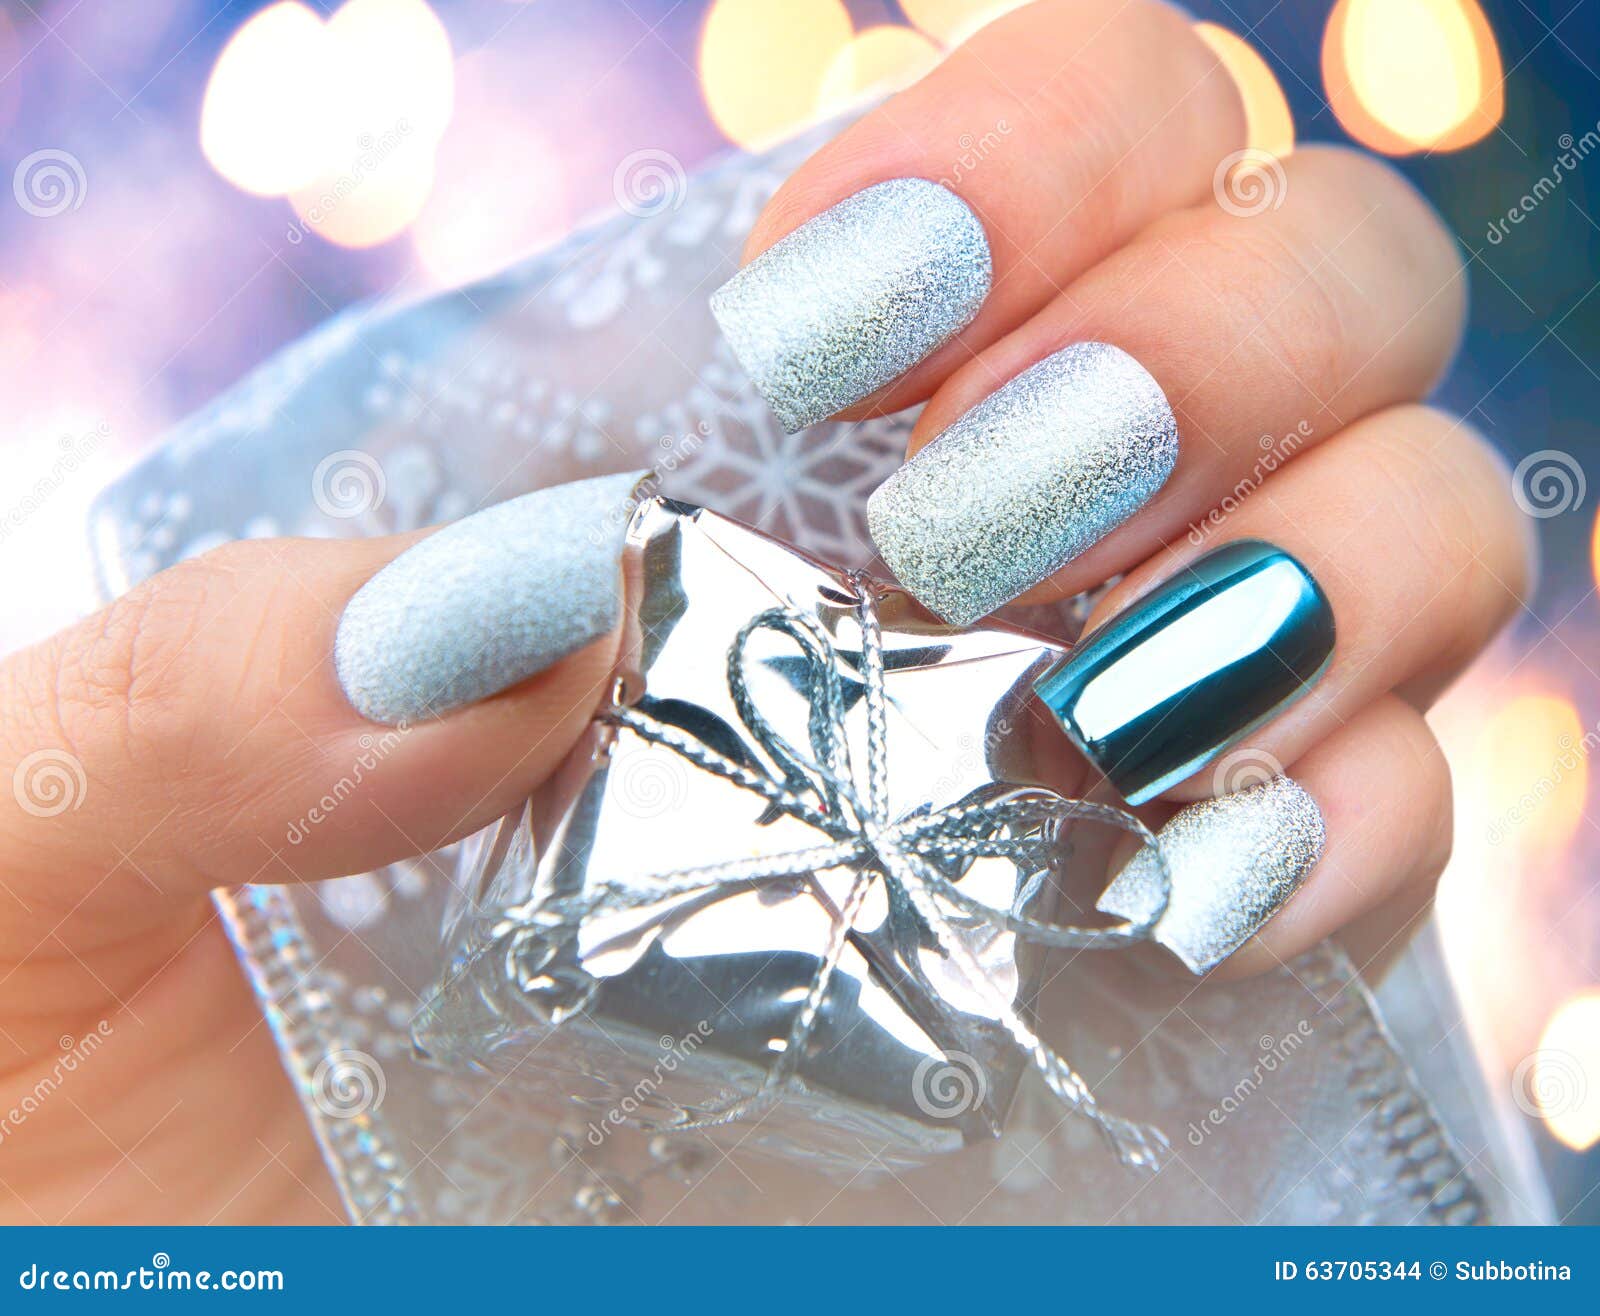 Christmas Nail Art Manicure. Winter Holiday Manicure Design Stock Photo ...